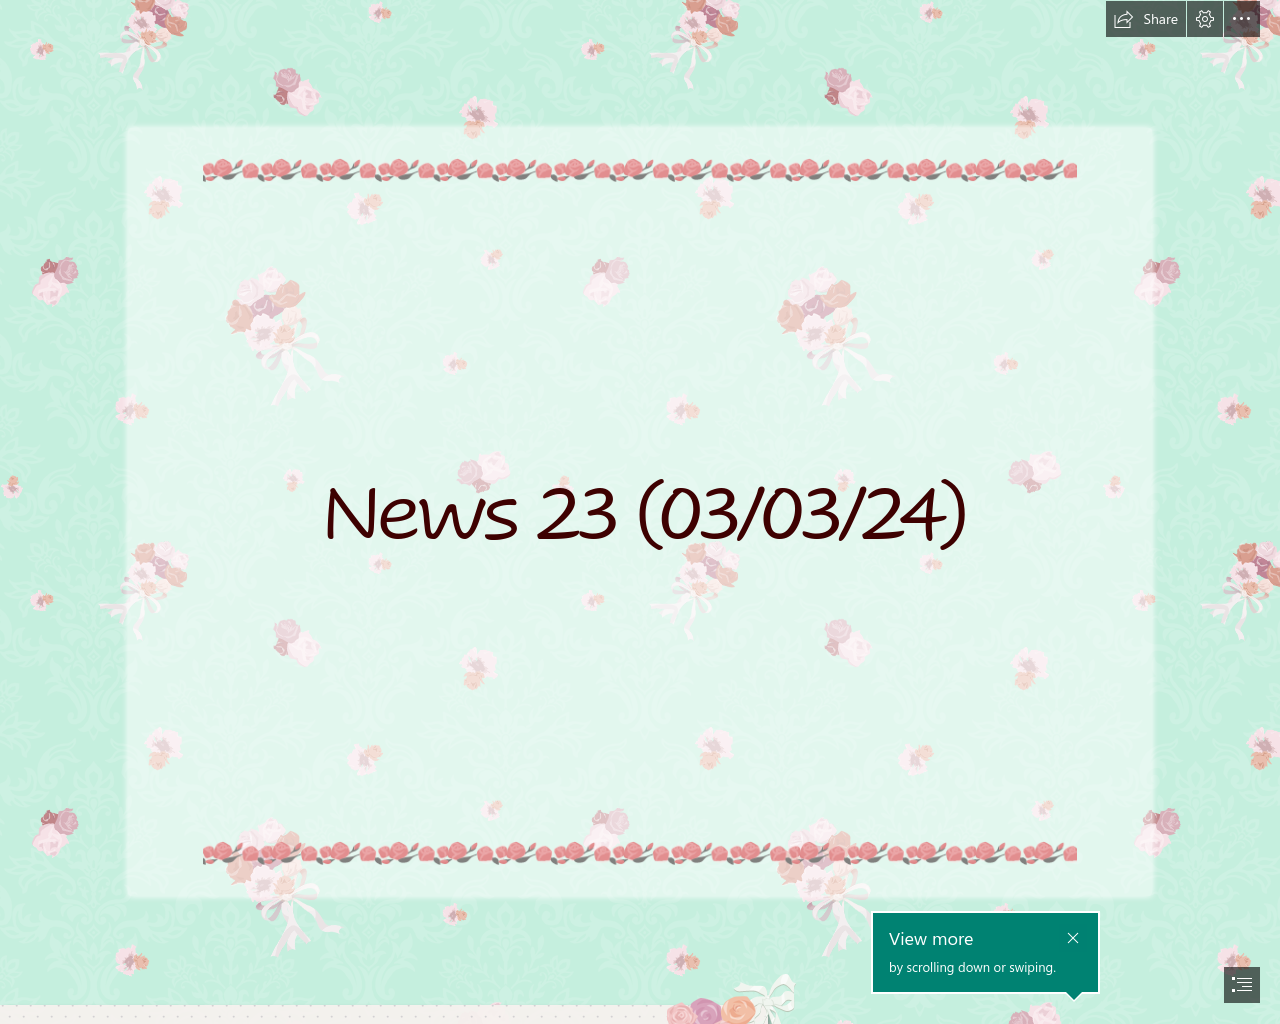 News 23